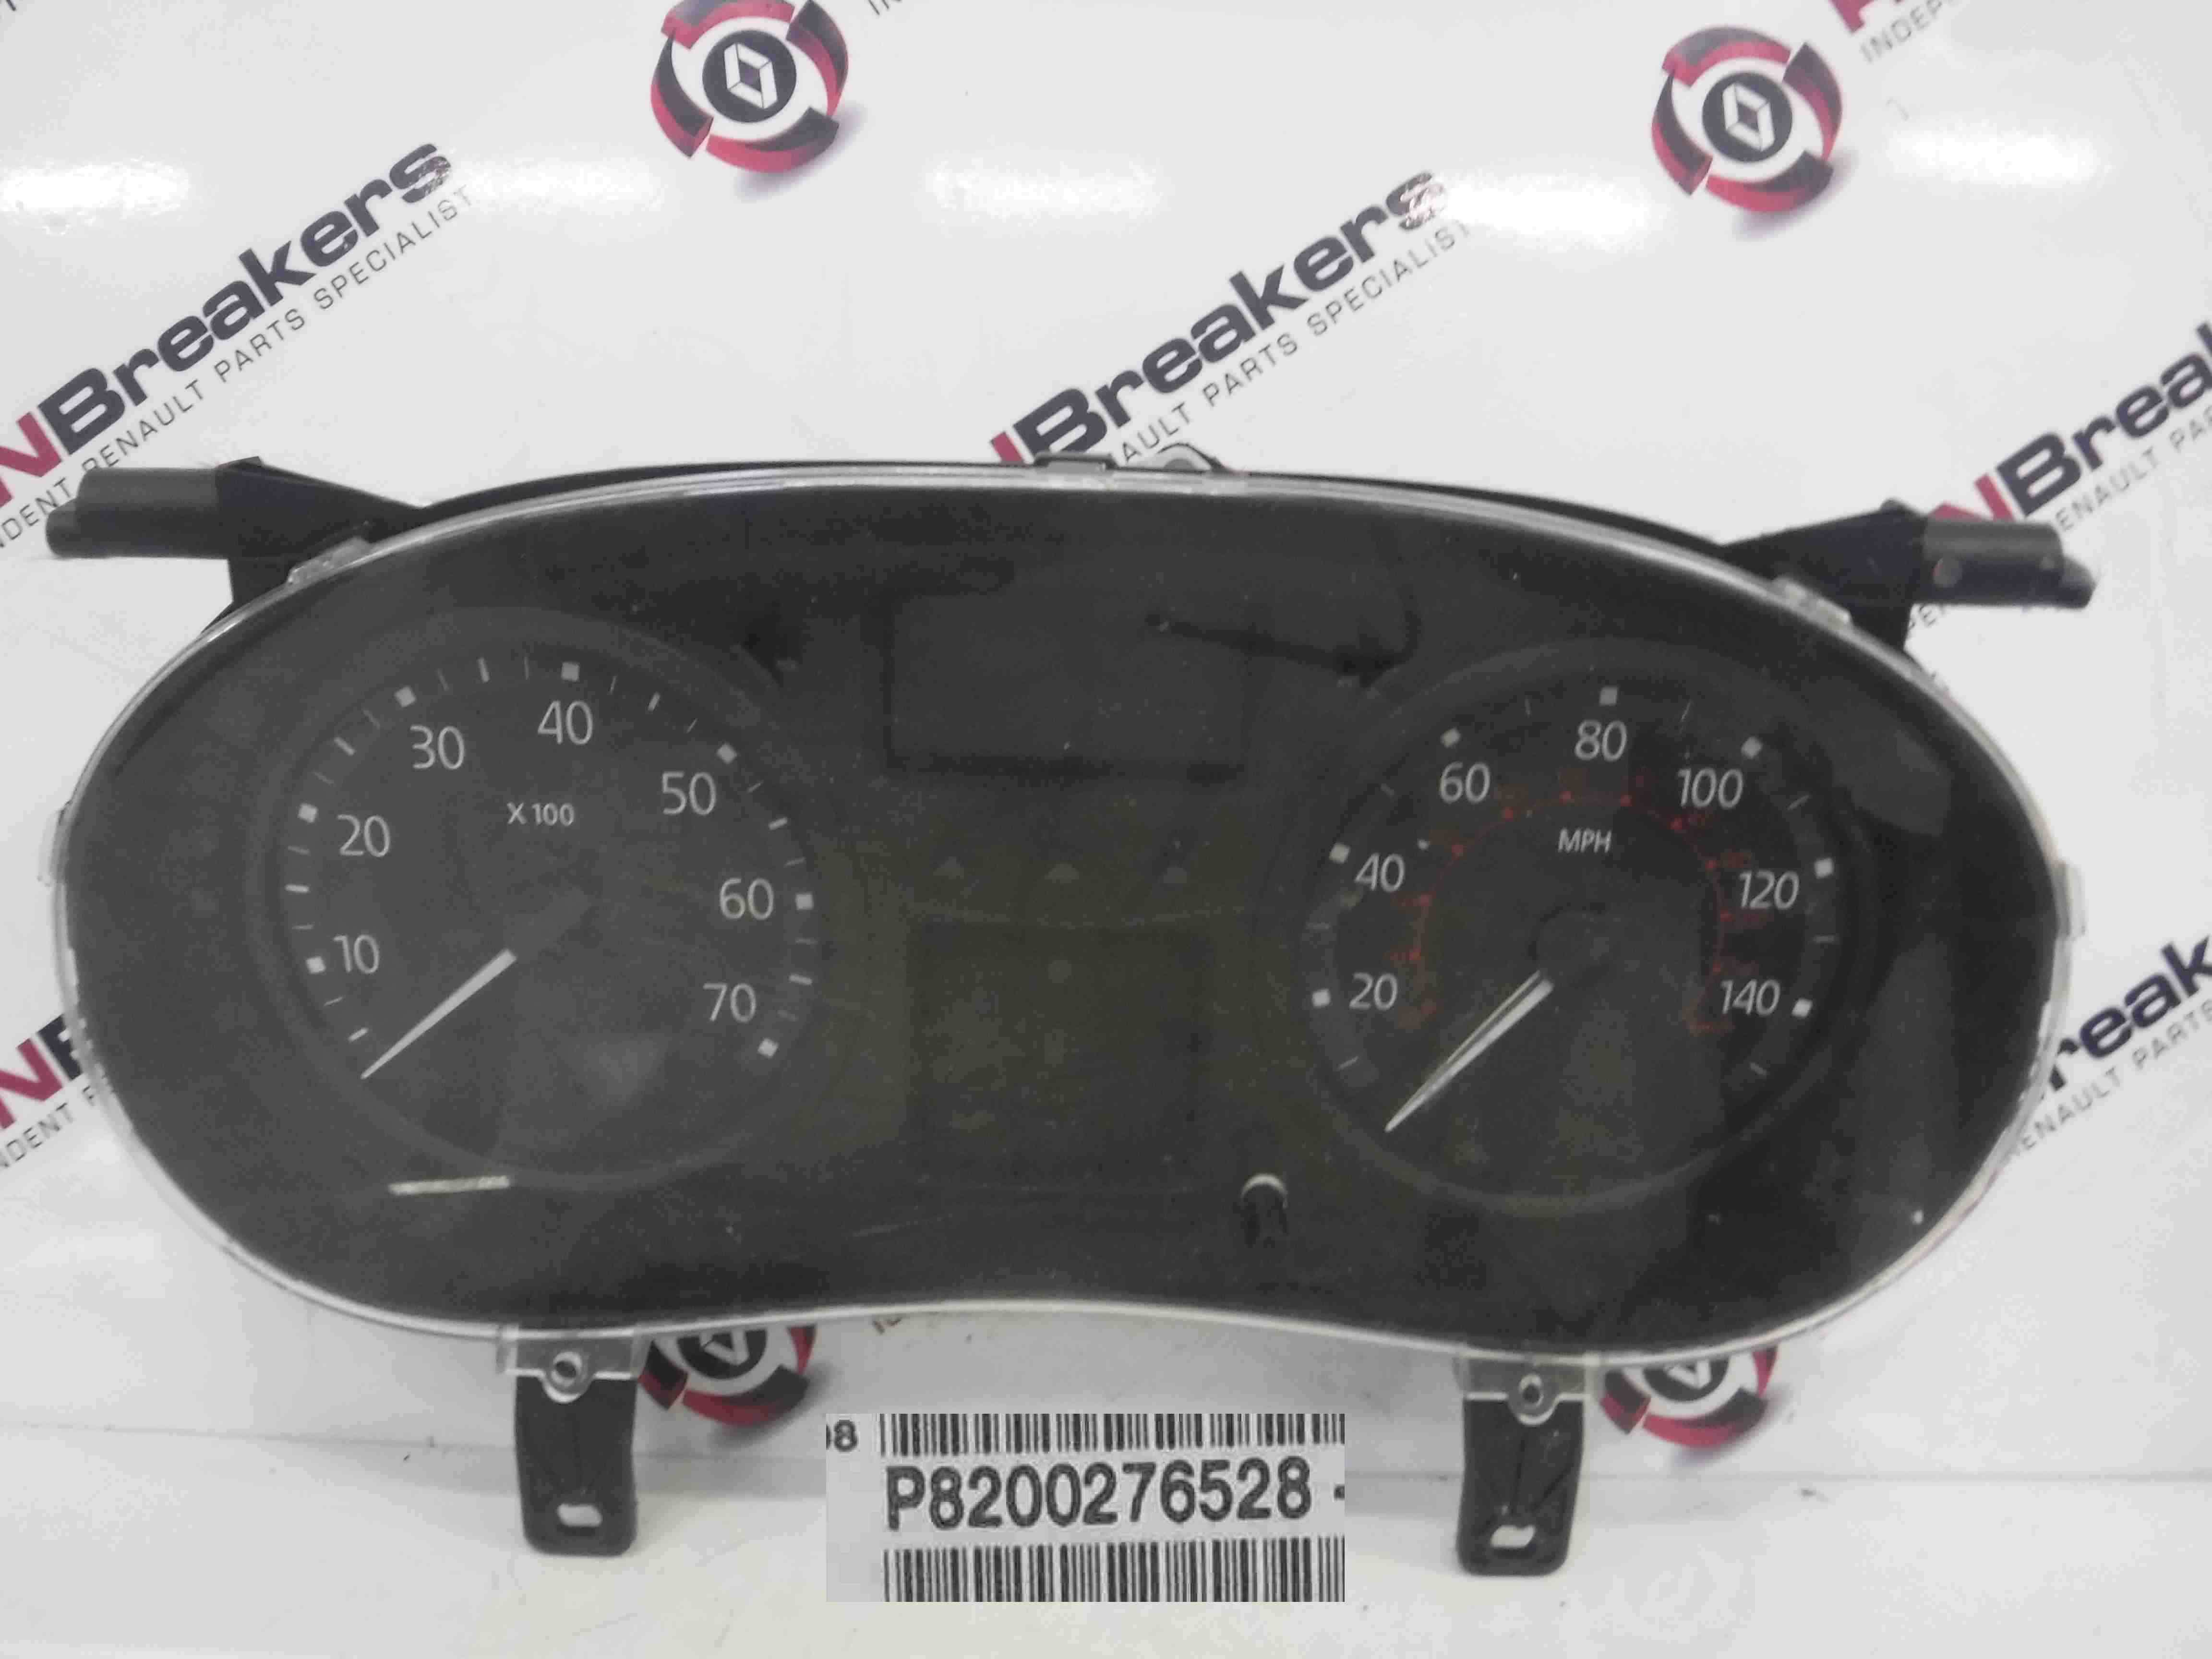 Renault Clio MK2 2001-2006 Instrument Panel Clocks 76k 8200276528